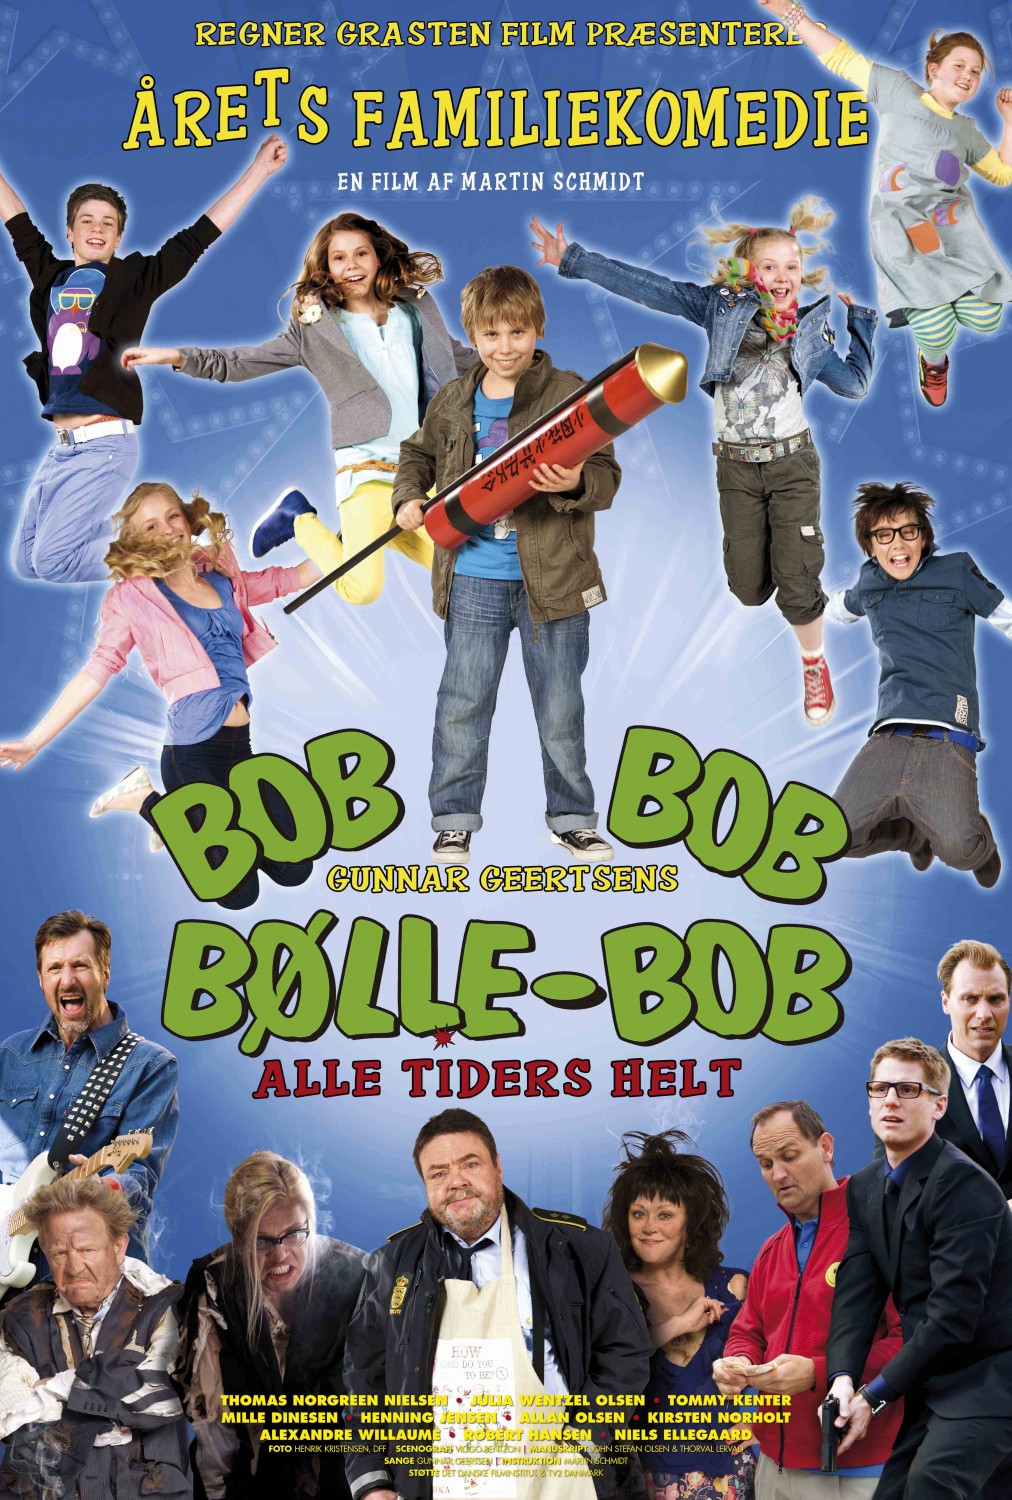 Extra Large Movie Poster Image for Bølle Bob - Alle tiders helt 